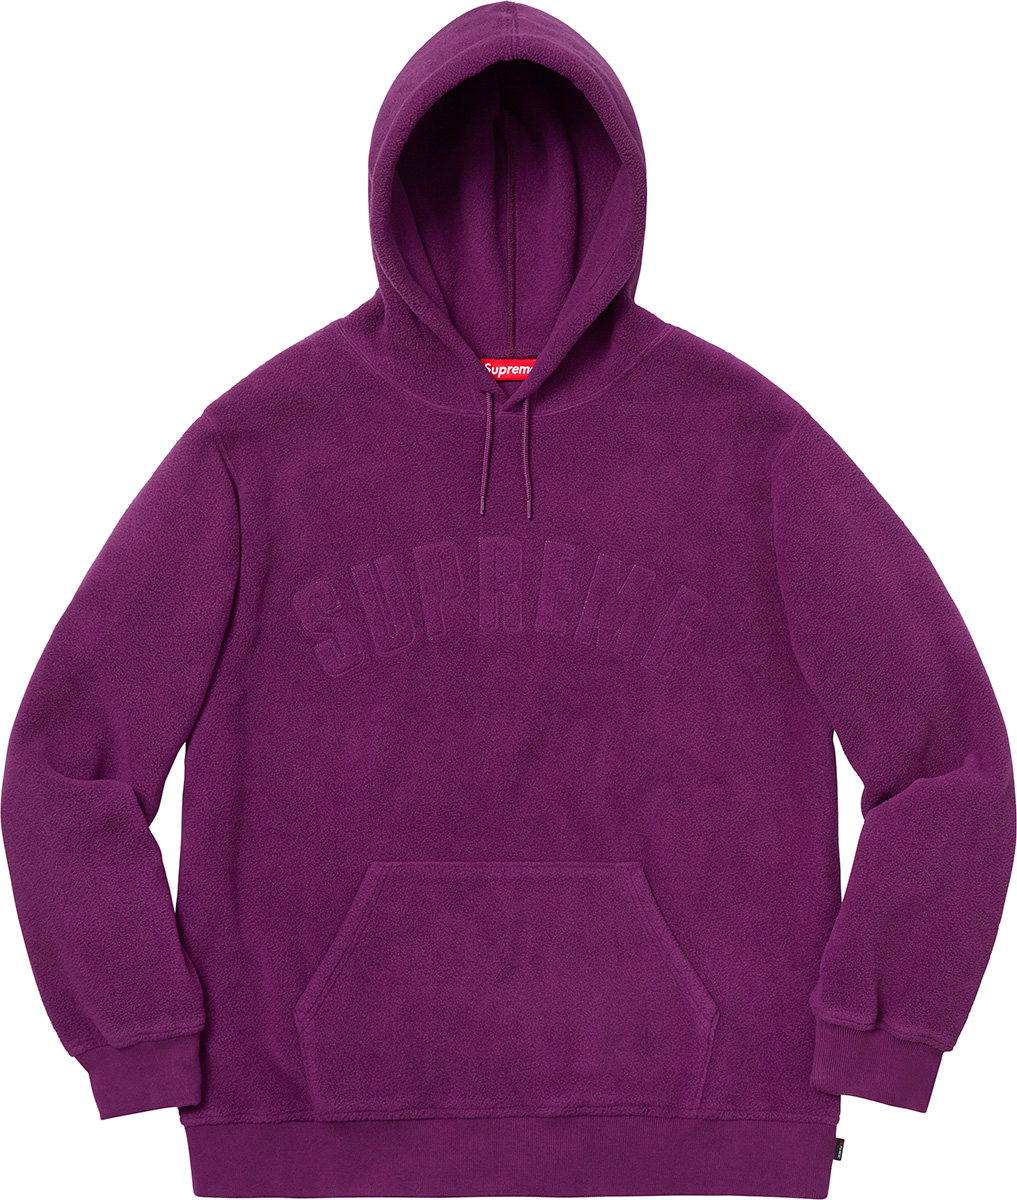 supreme-18aw-fall-winter-polartec-hooded-sweatshirt